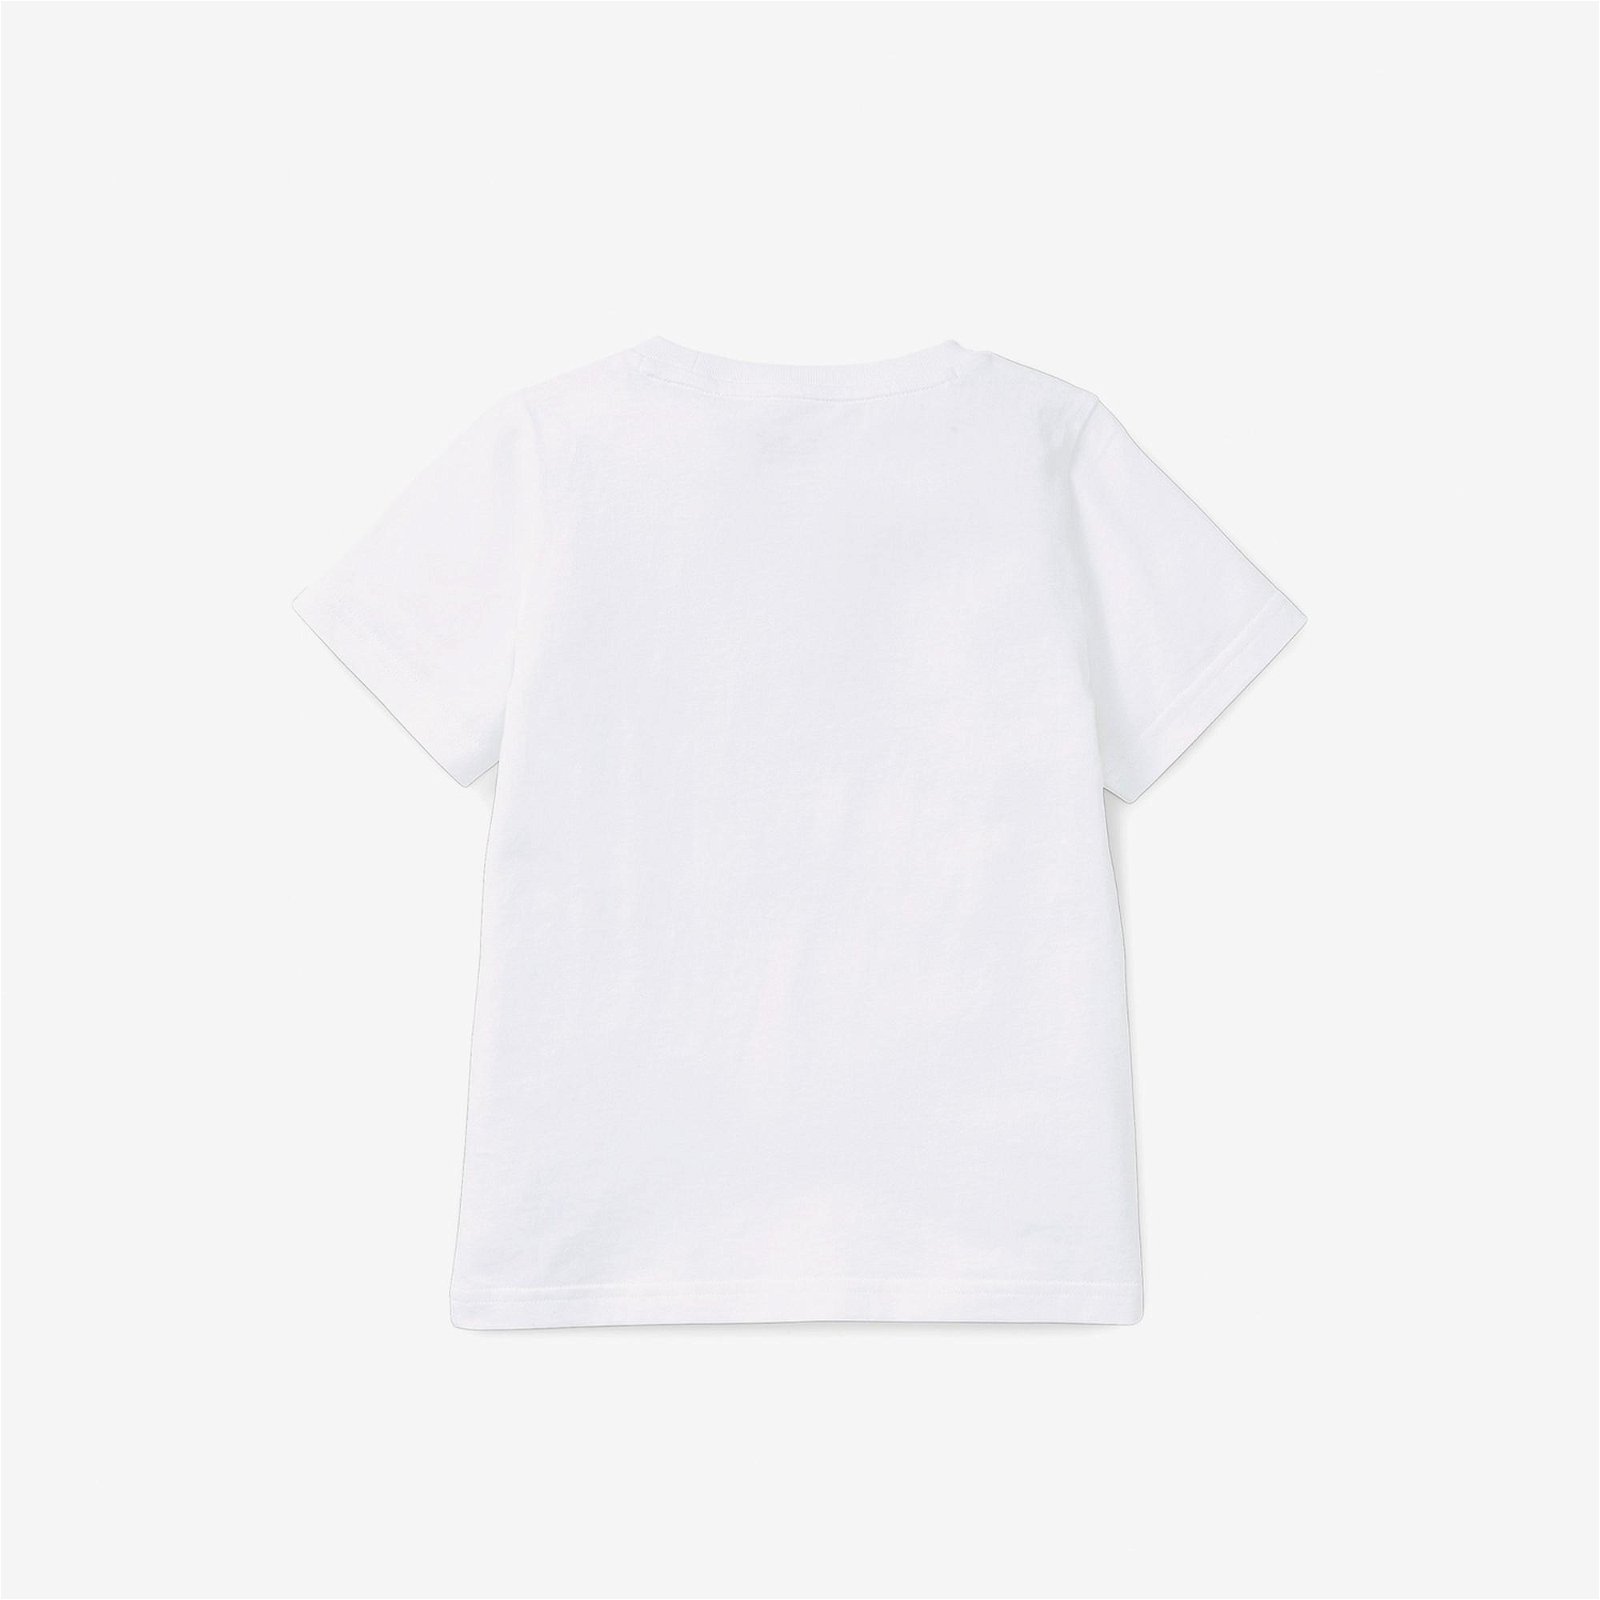 Puma Small World Prime Çocuk Beyaz T-Shirt